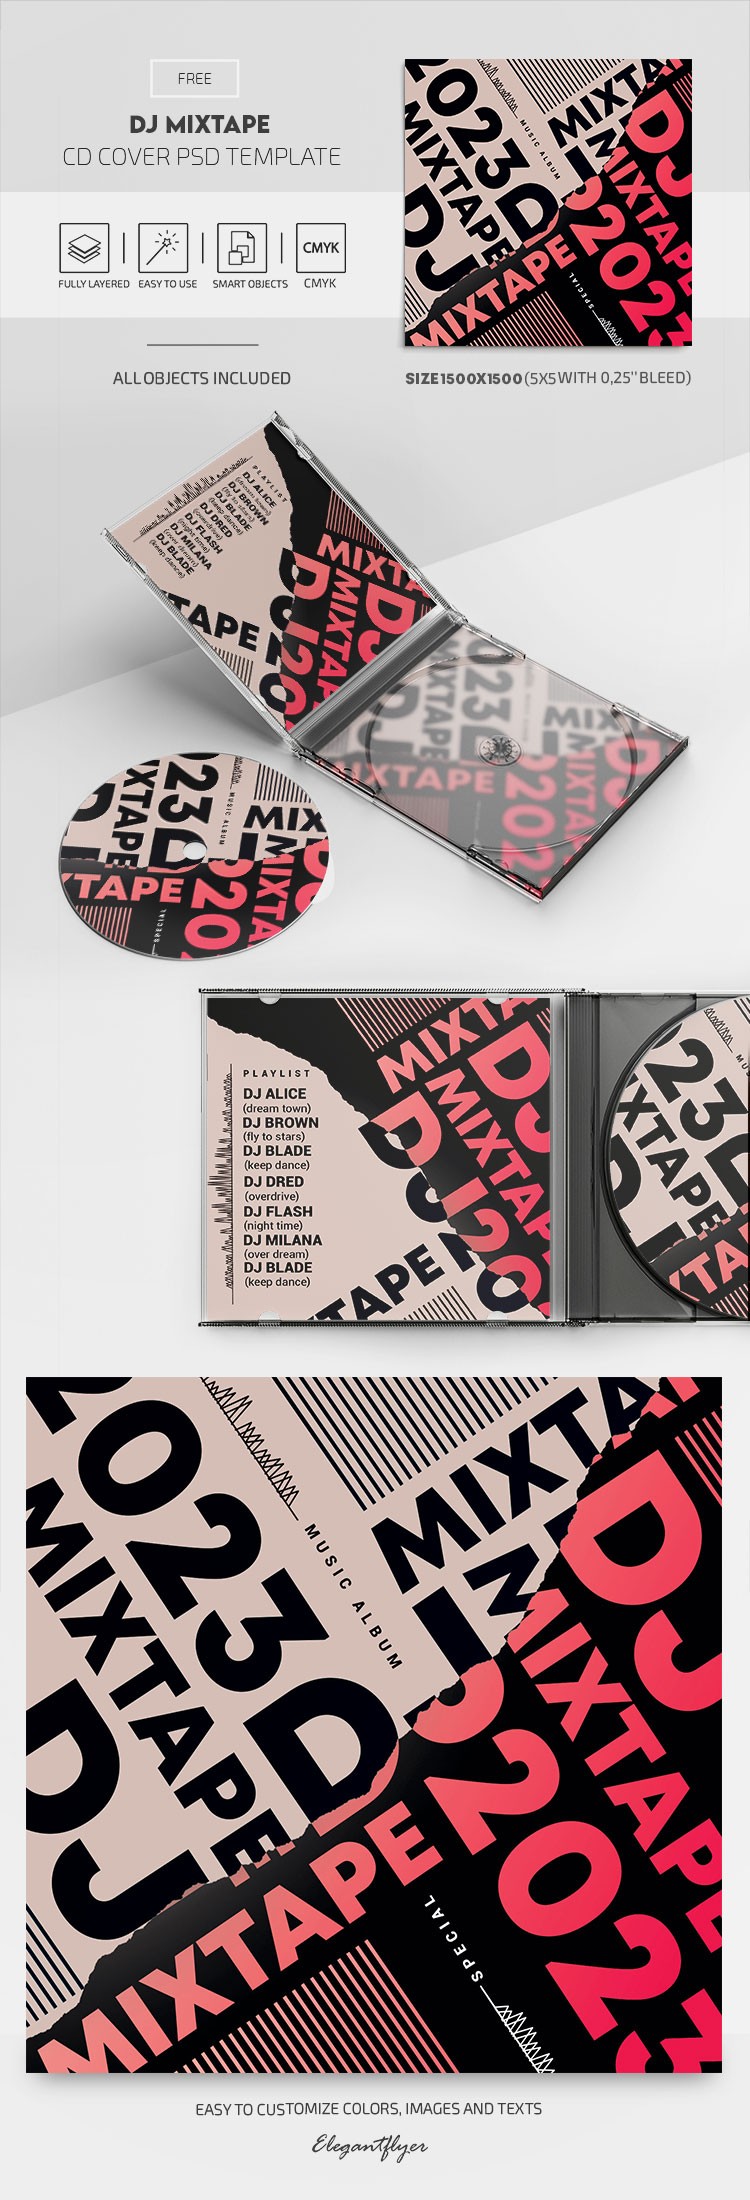 DJ Mixtape CD Cover by ElegantFlyer